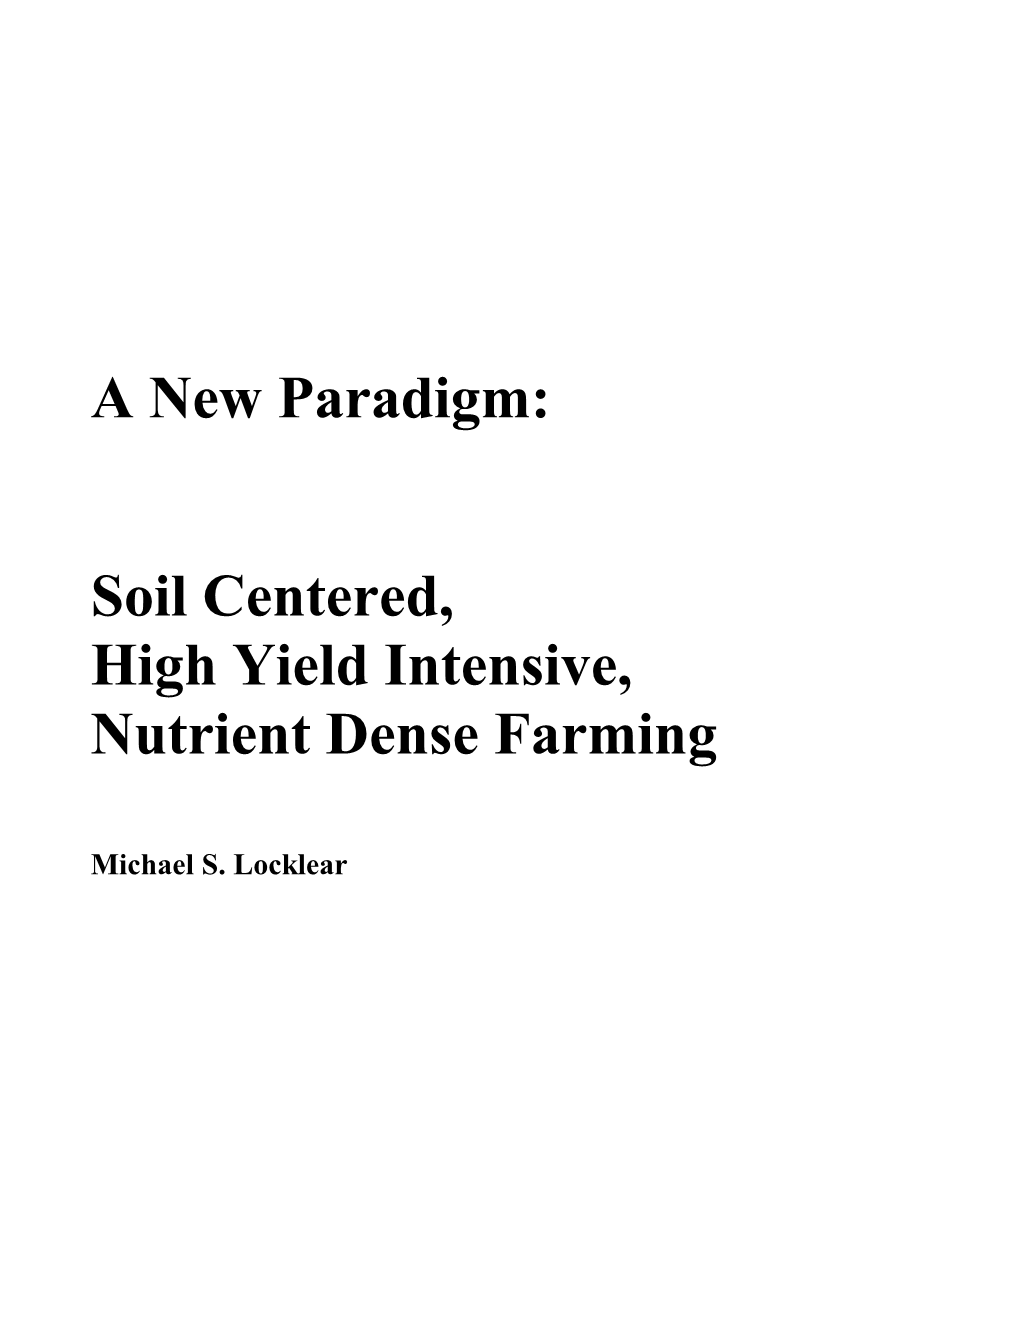 Soil Centered, High Yield Intensive, Nutrient Dense Farming